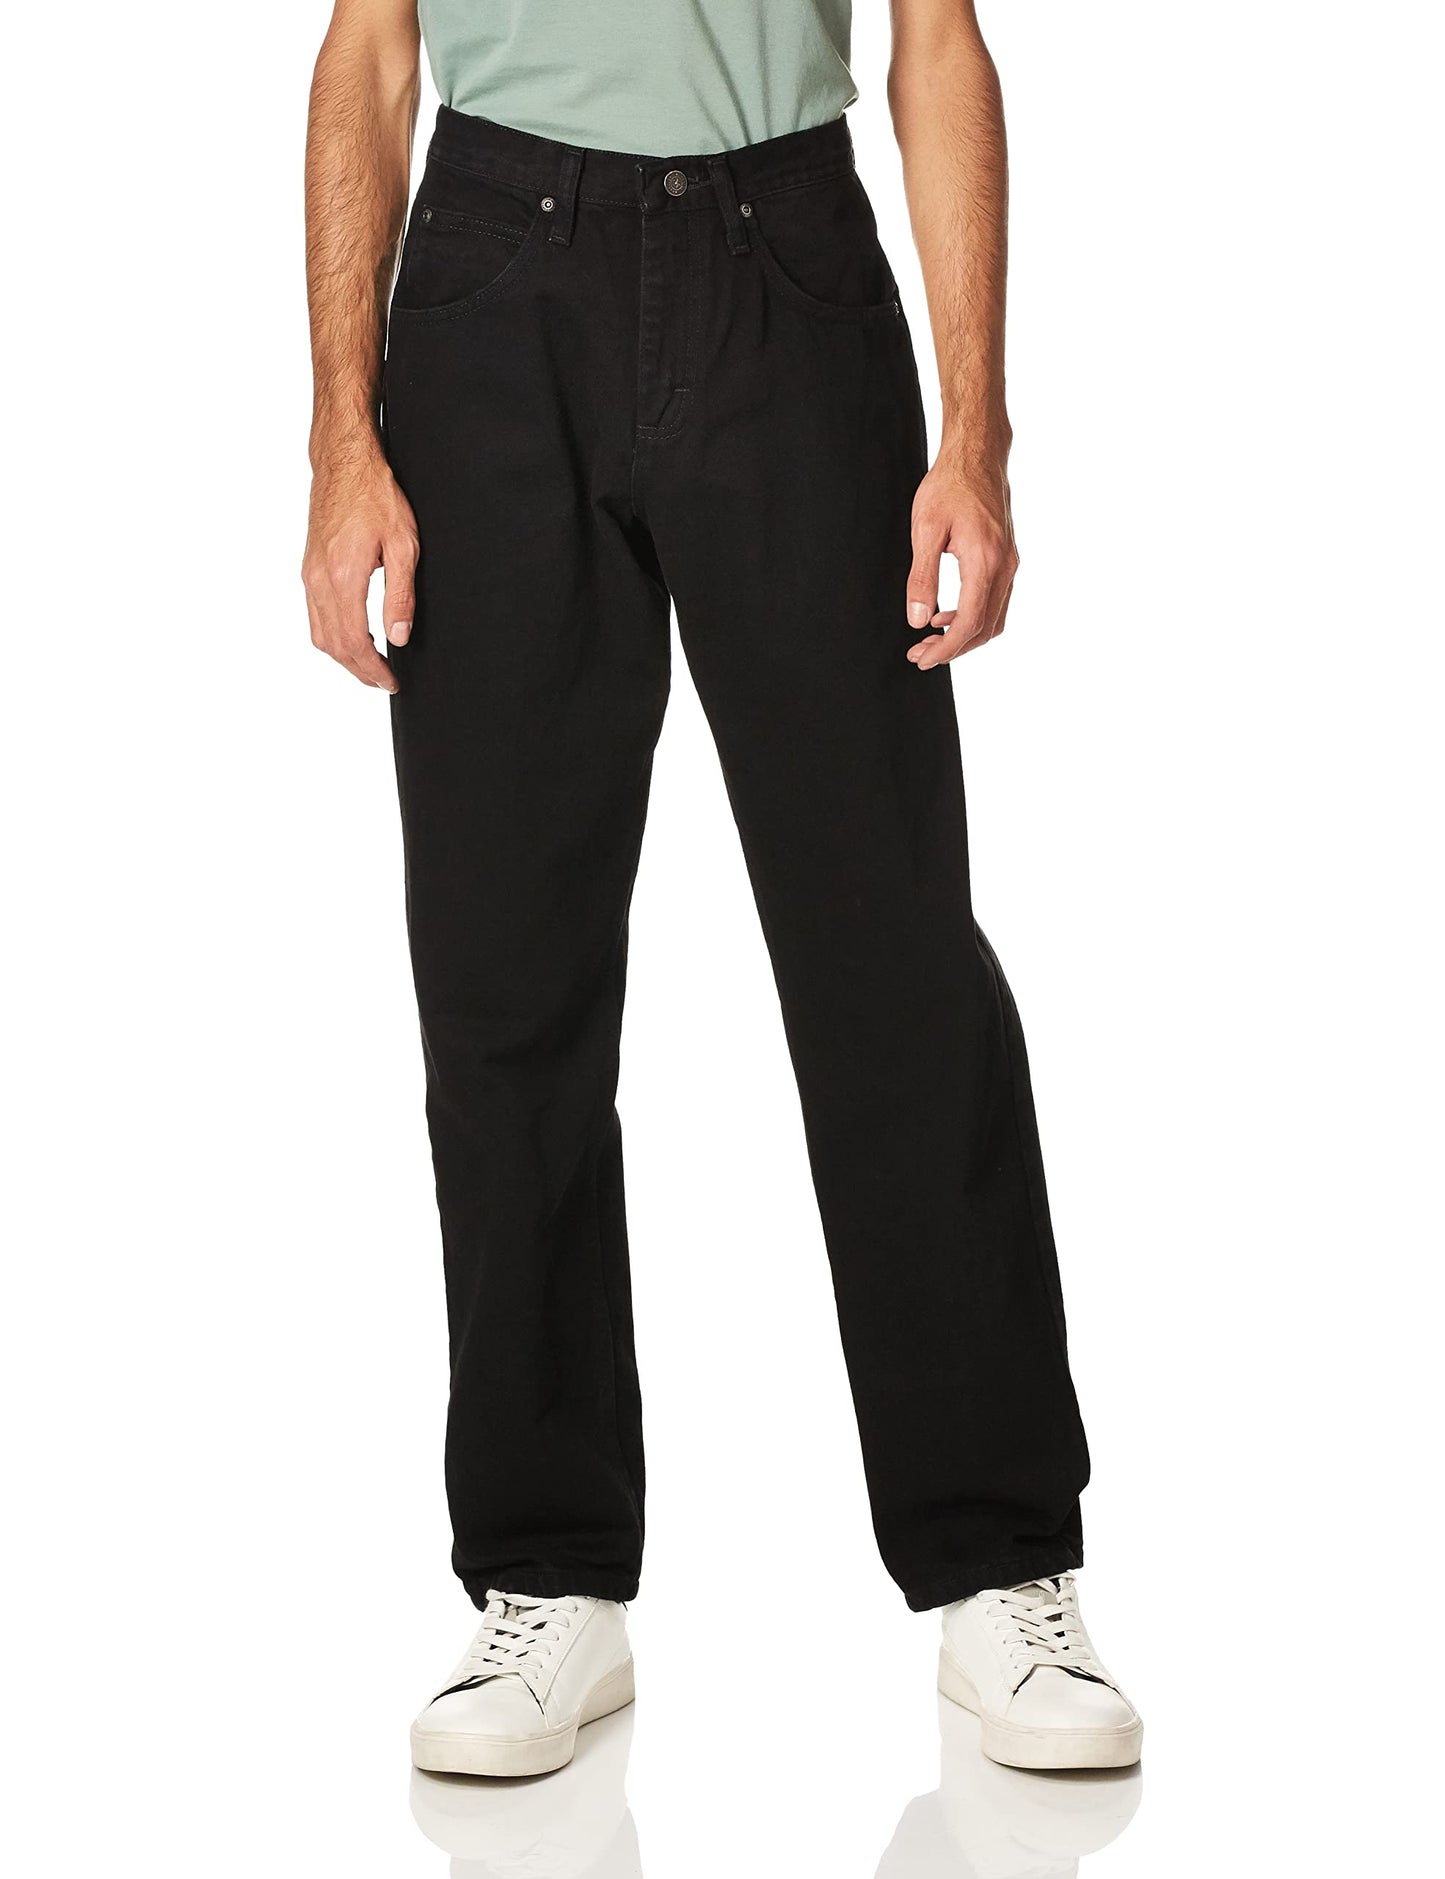 Wrangler Authentics Men's Big & Tall Classic 5-Pocket Relaxed Fit Cotton Jean, Black, 52W x 30L